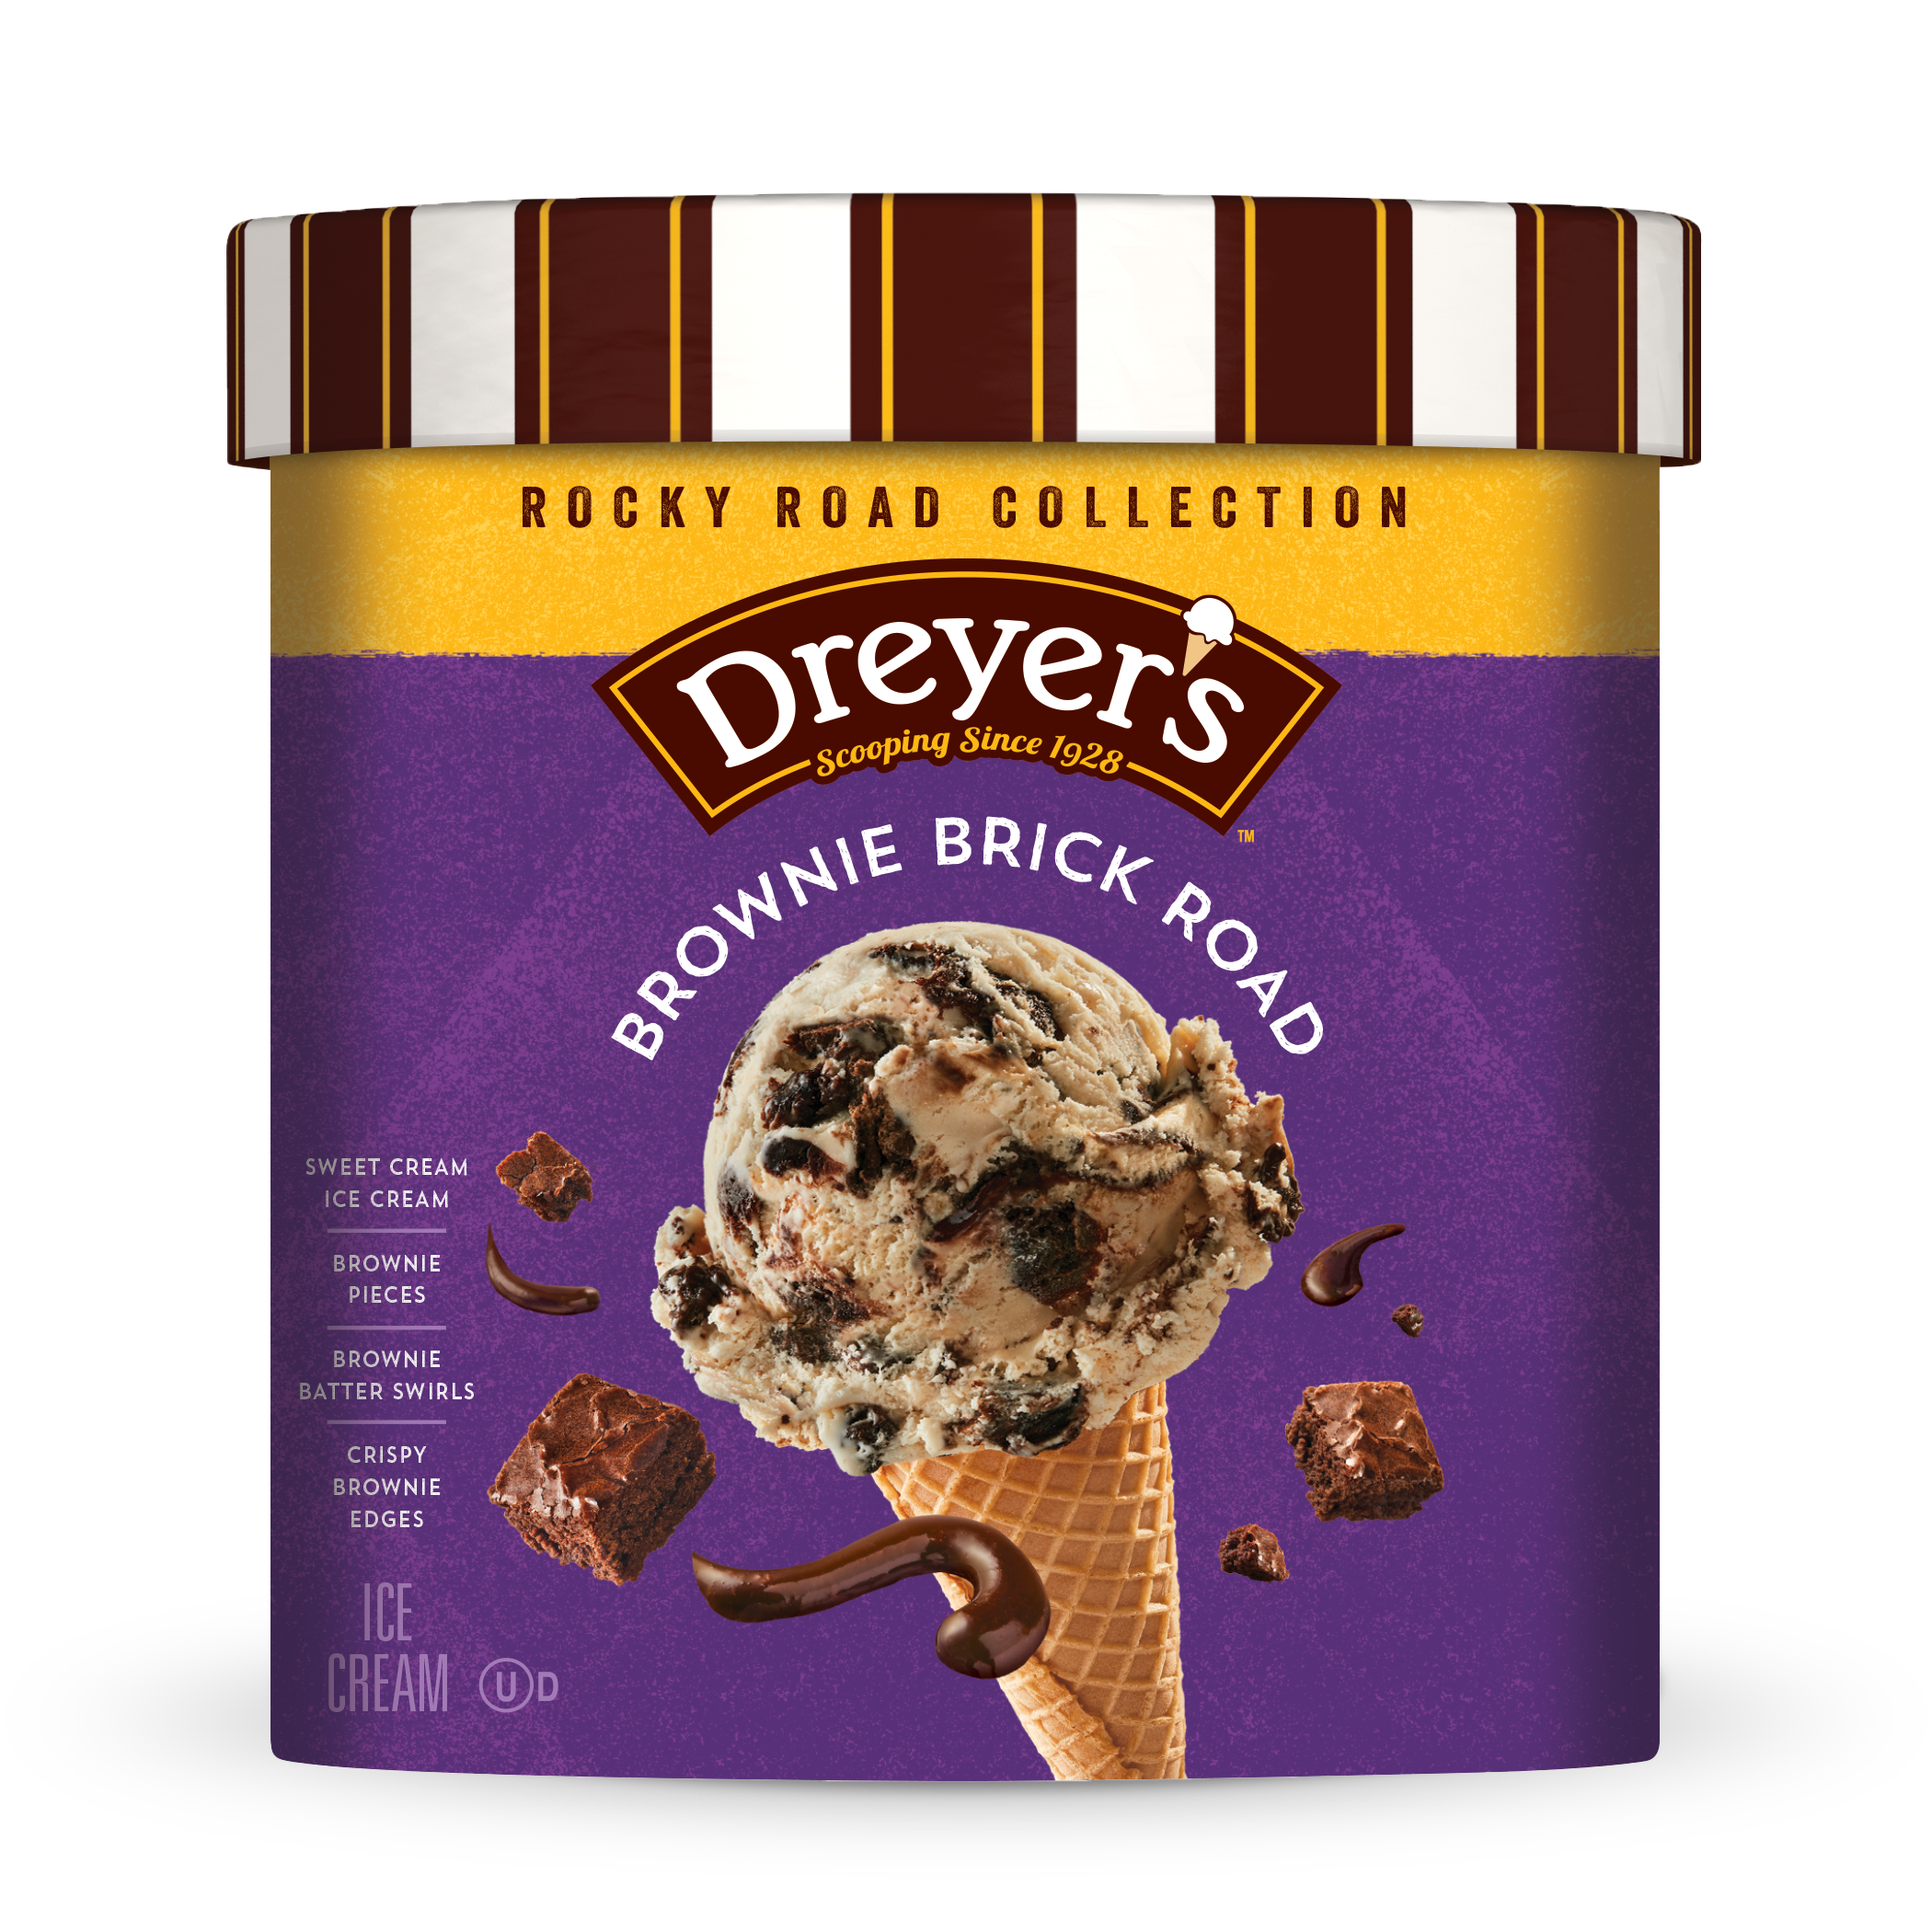 Carton of Dreyer's brownie brick road ice cream